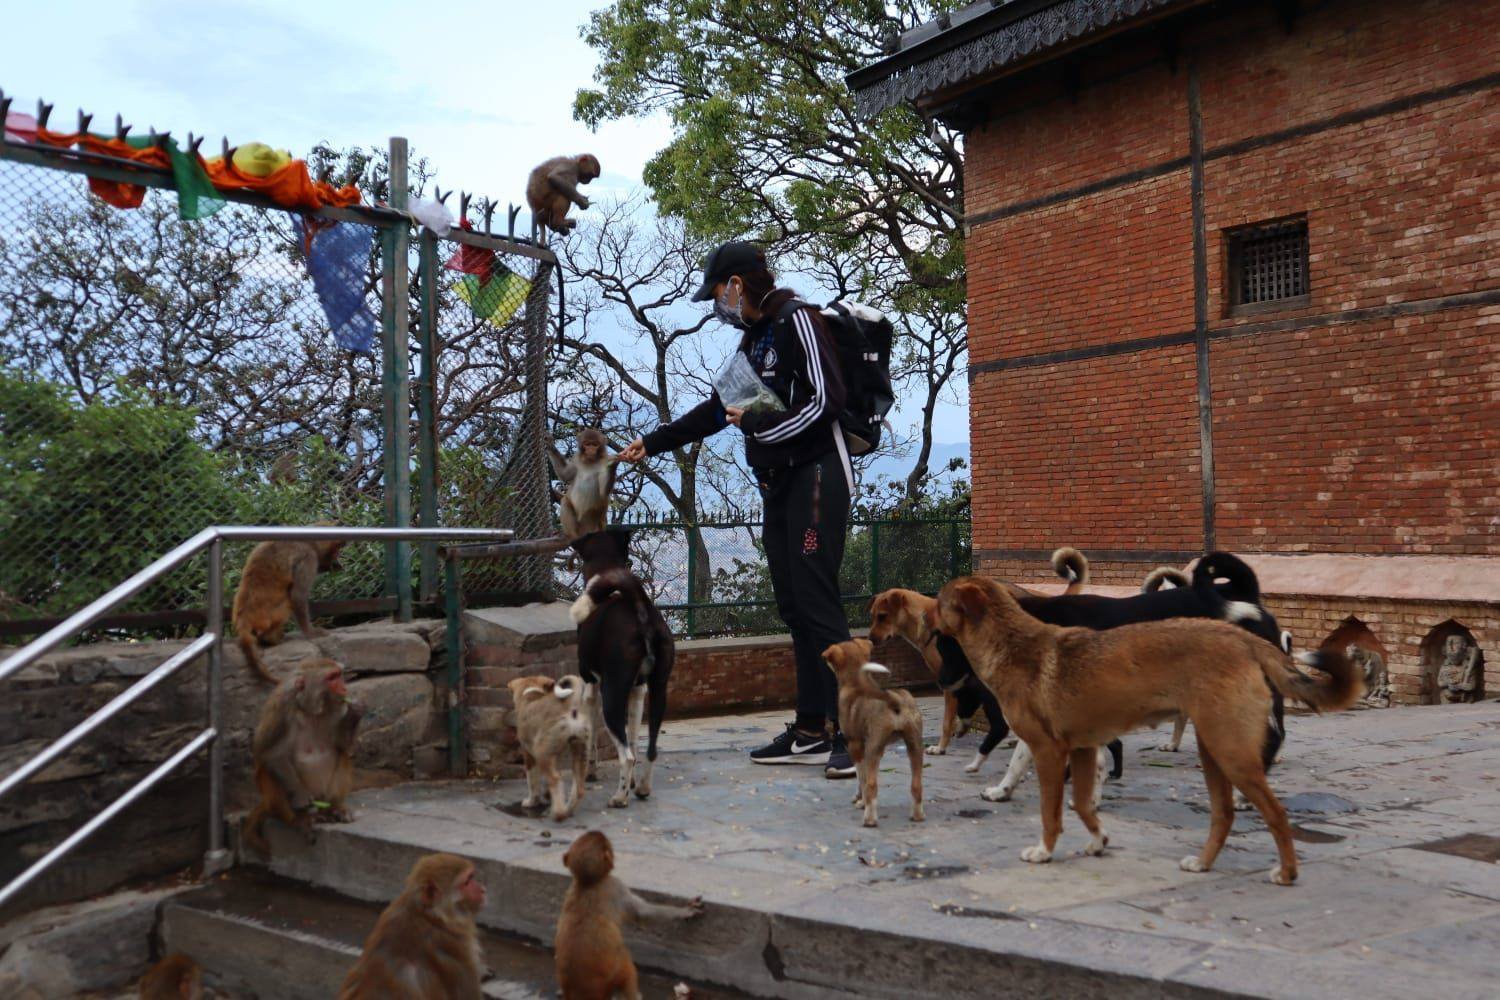 animal feeding in Kathmandu